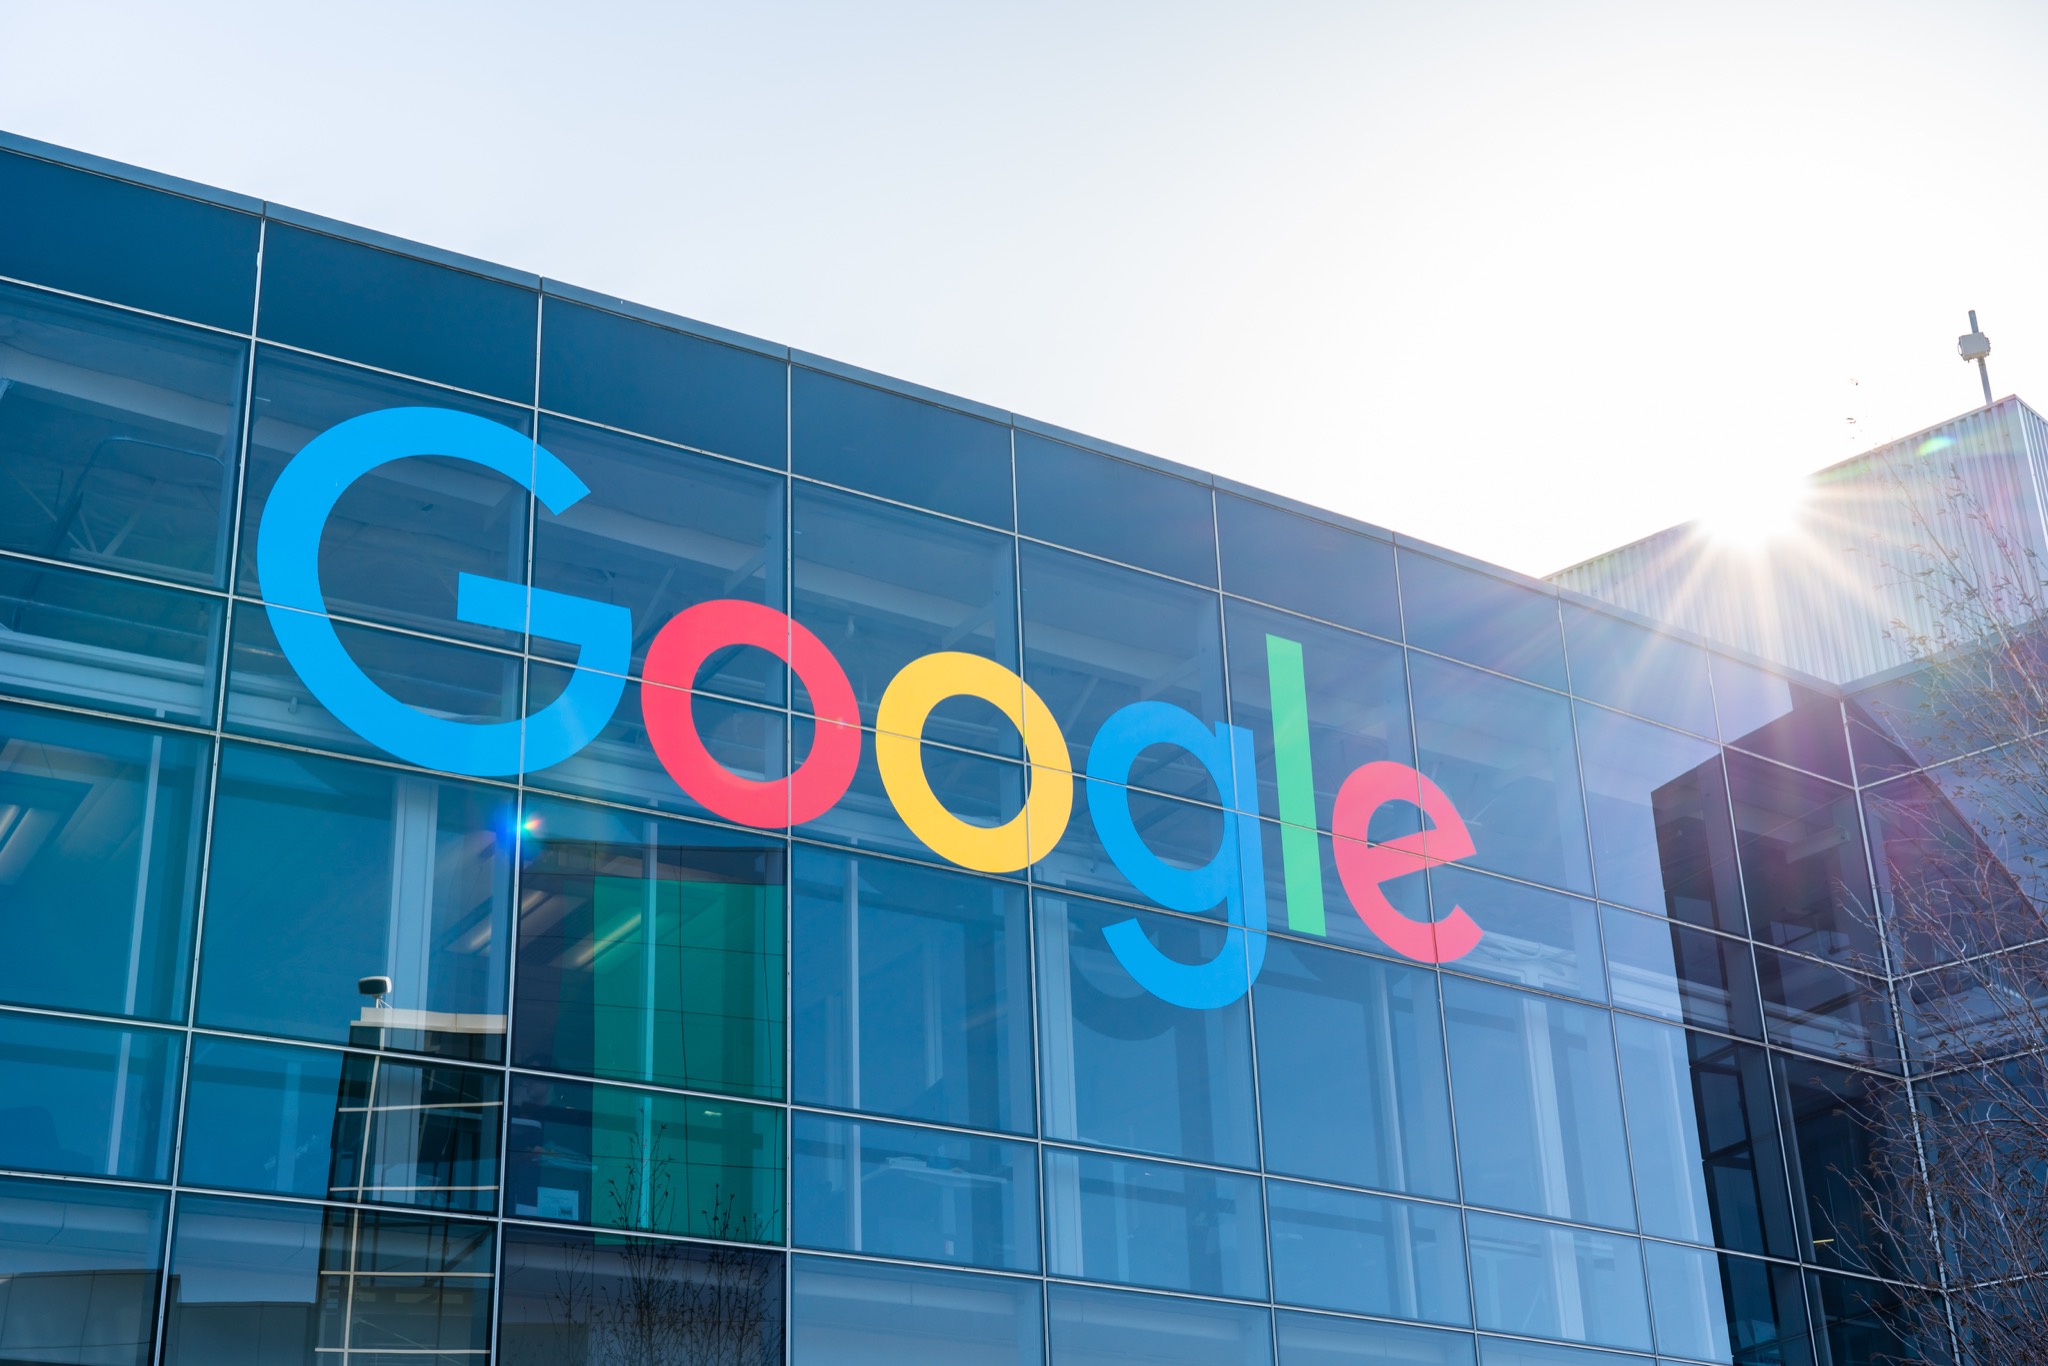 Google Headquarters (Googleplex)